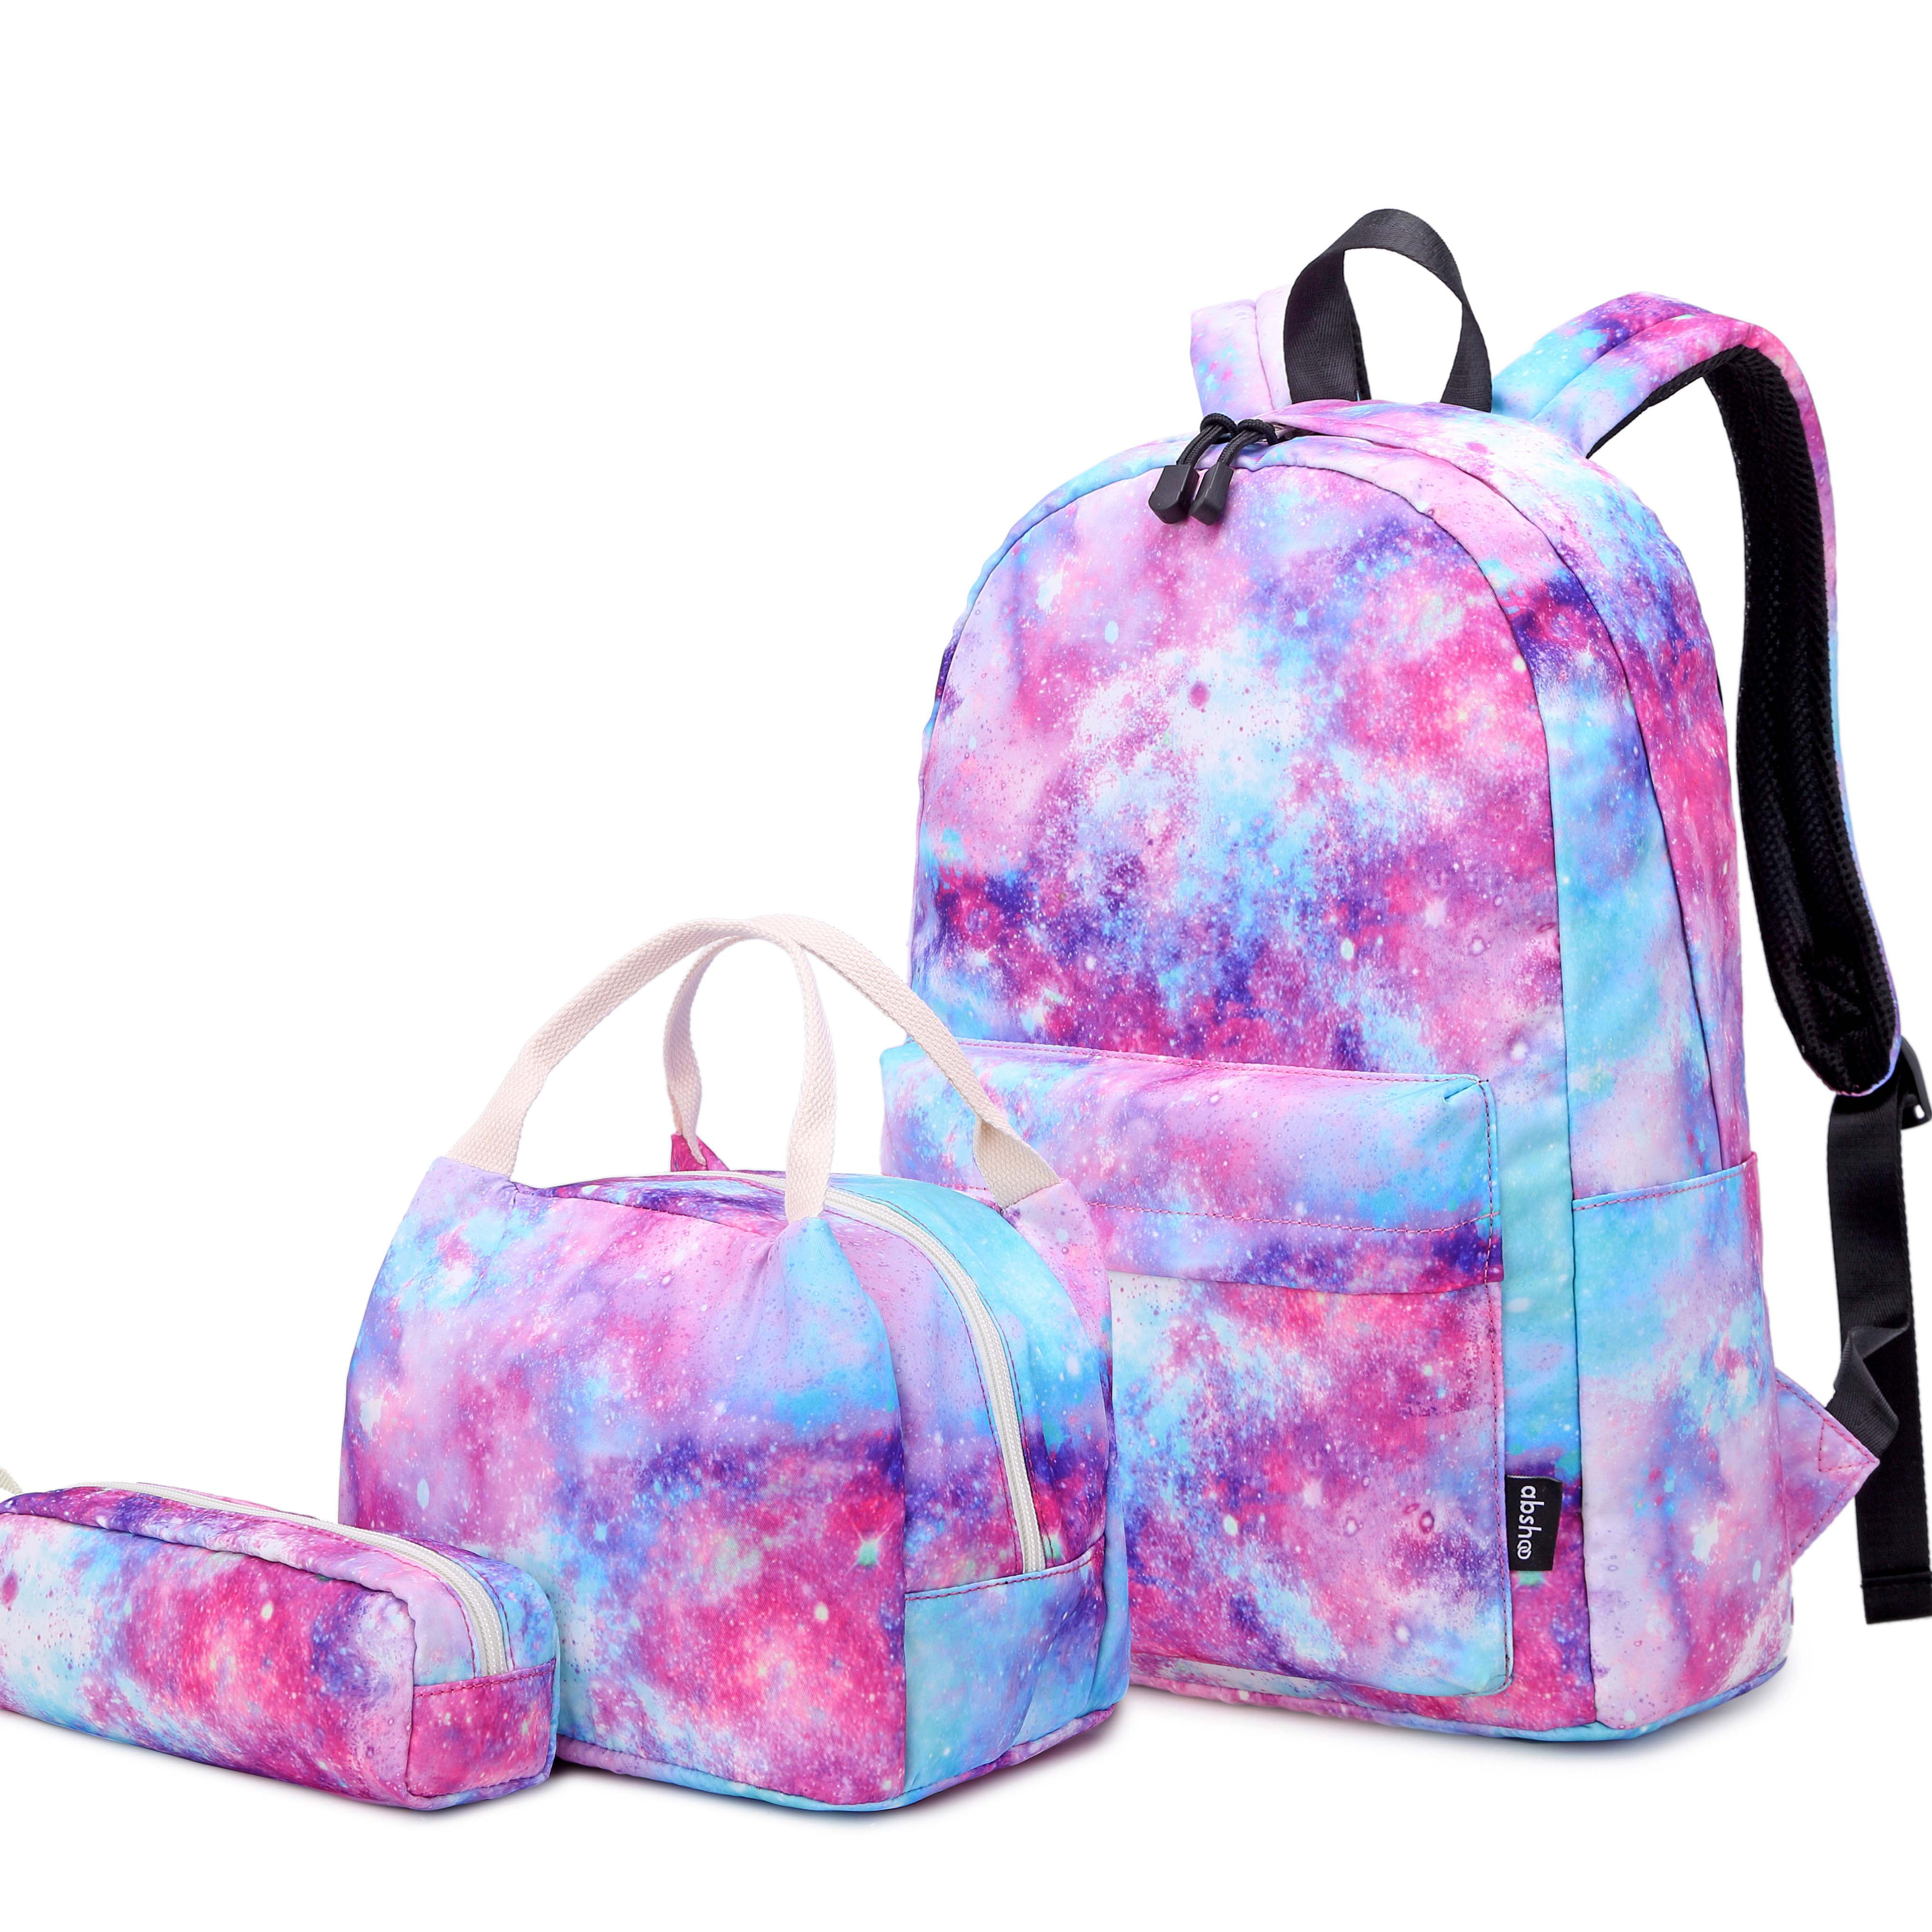 A Galaxy Abshoo Lightweight Galaxy School Backpacks for Teen Girls Backpack with Lunch Bag 